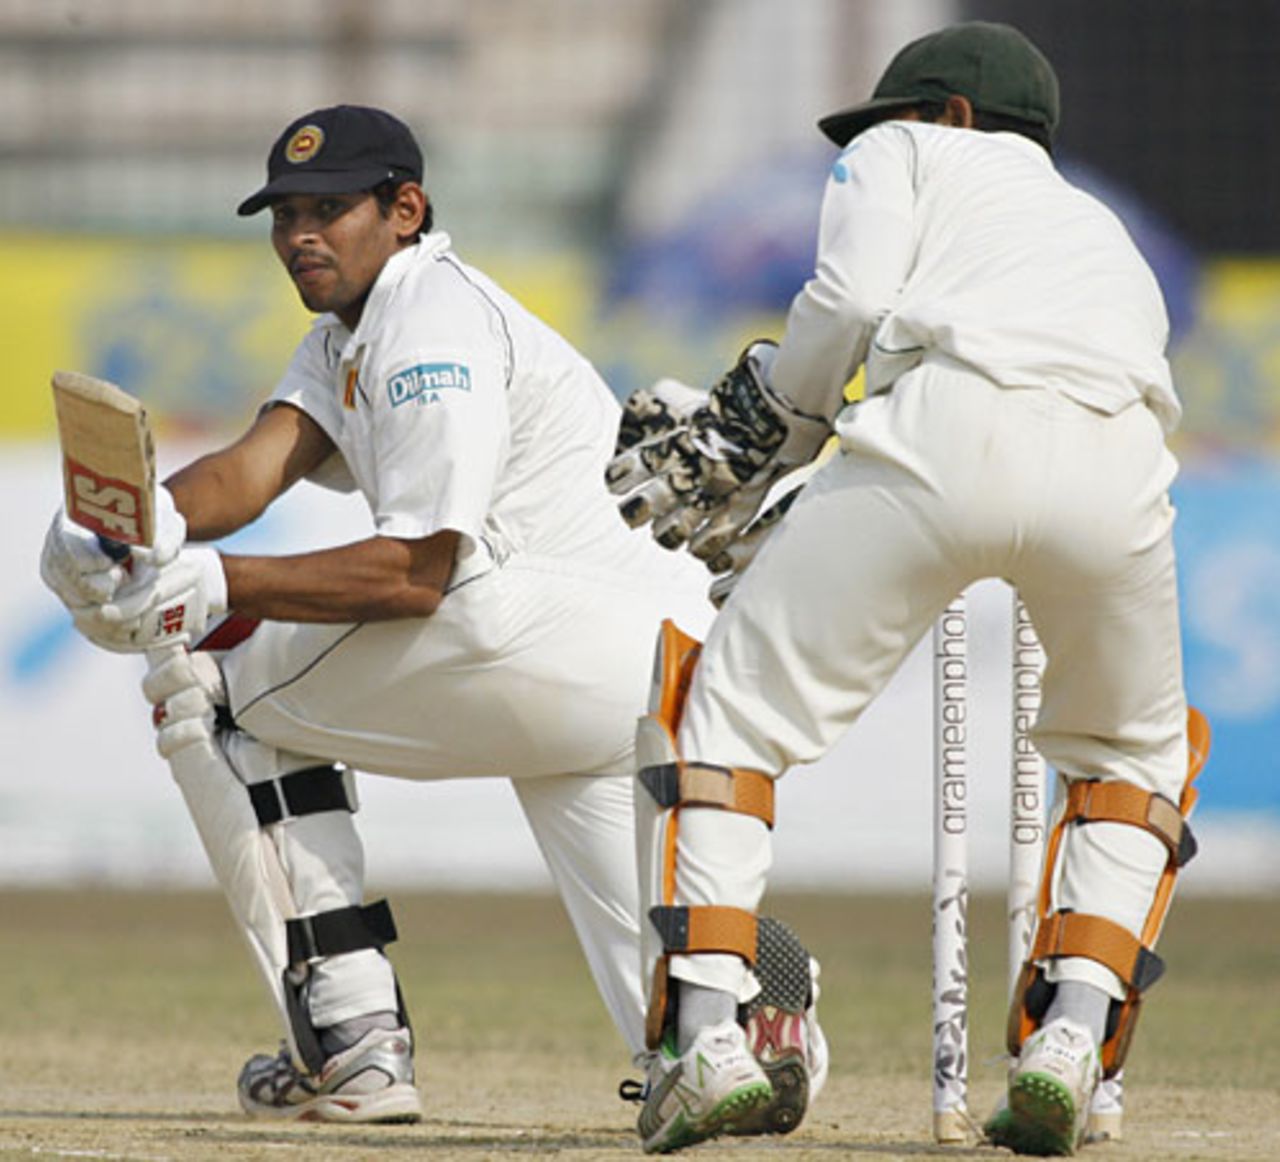 Tillekaratne Dilshan sweeps during his century, Bangladesh v Sri Lanka, 2nd Test, Chittagong, 4th day, January 6, 2008